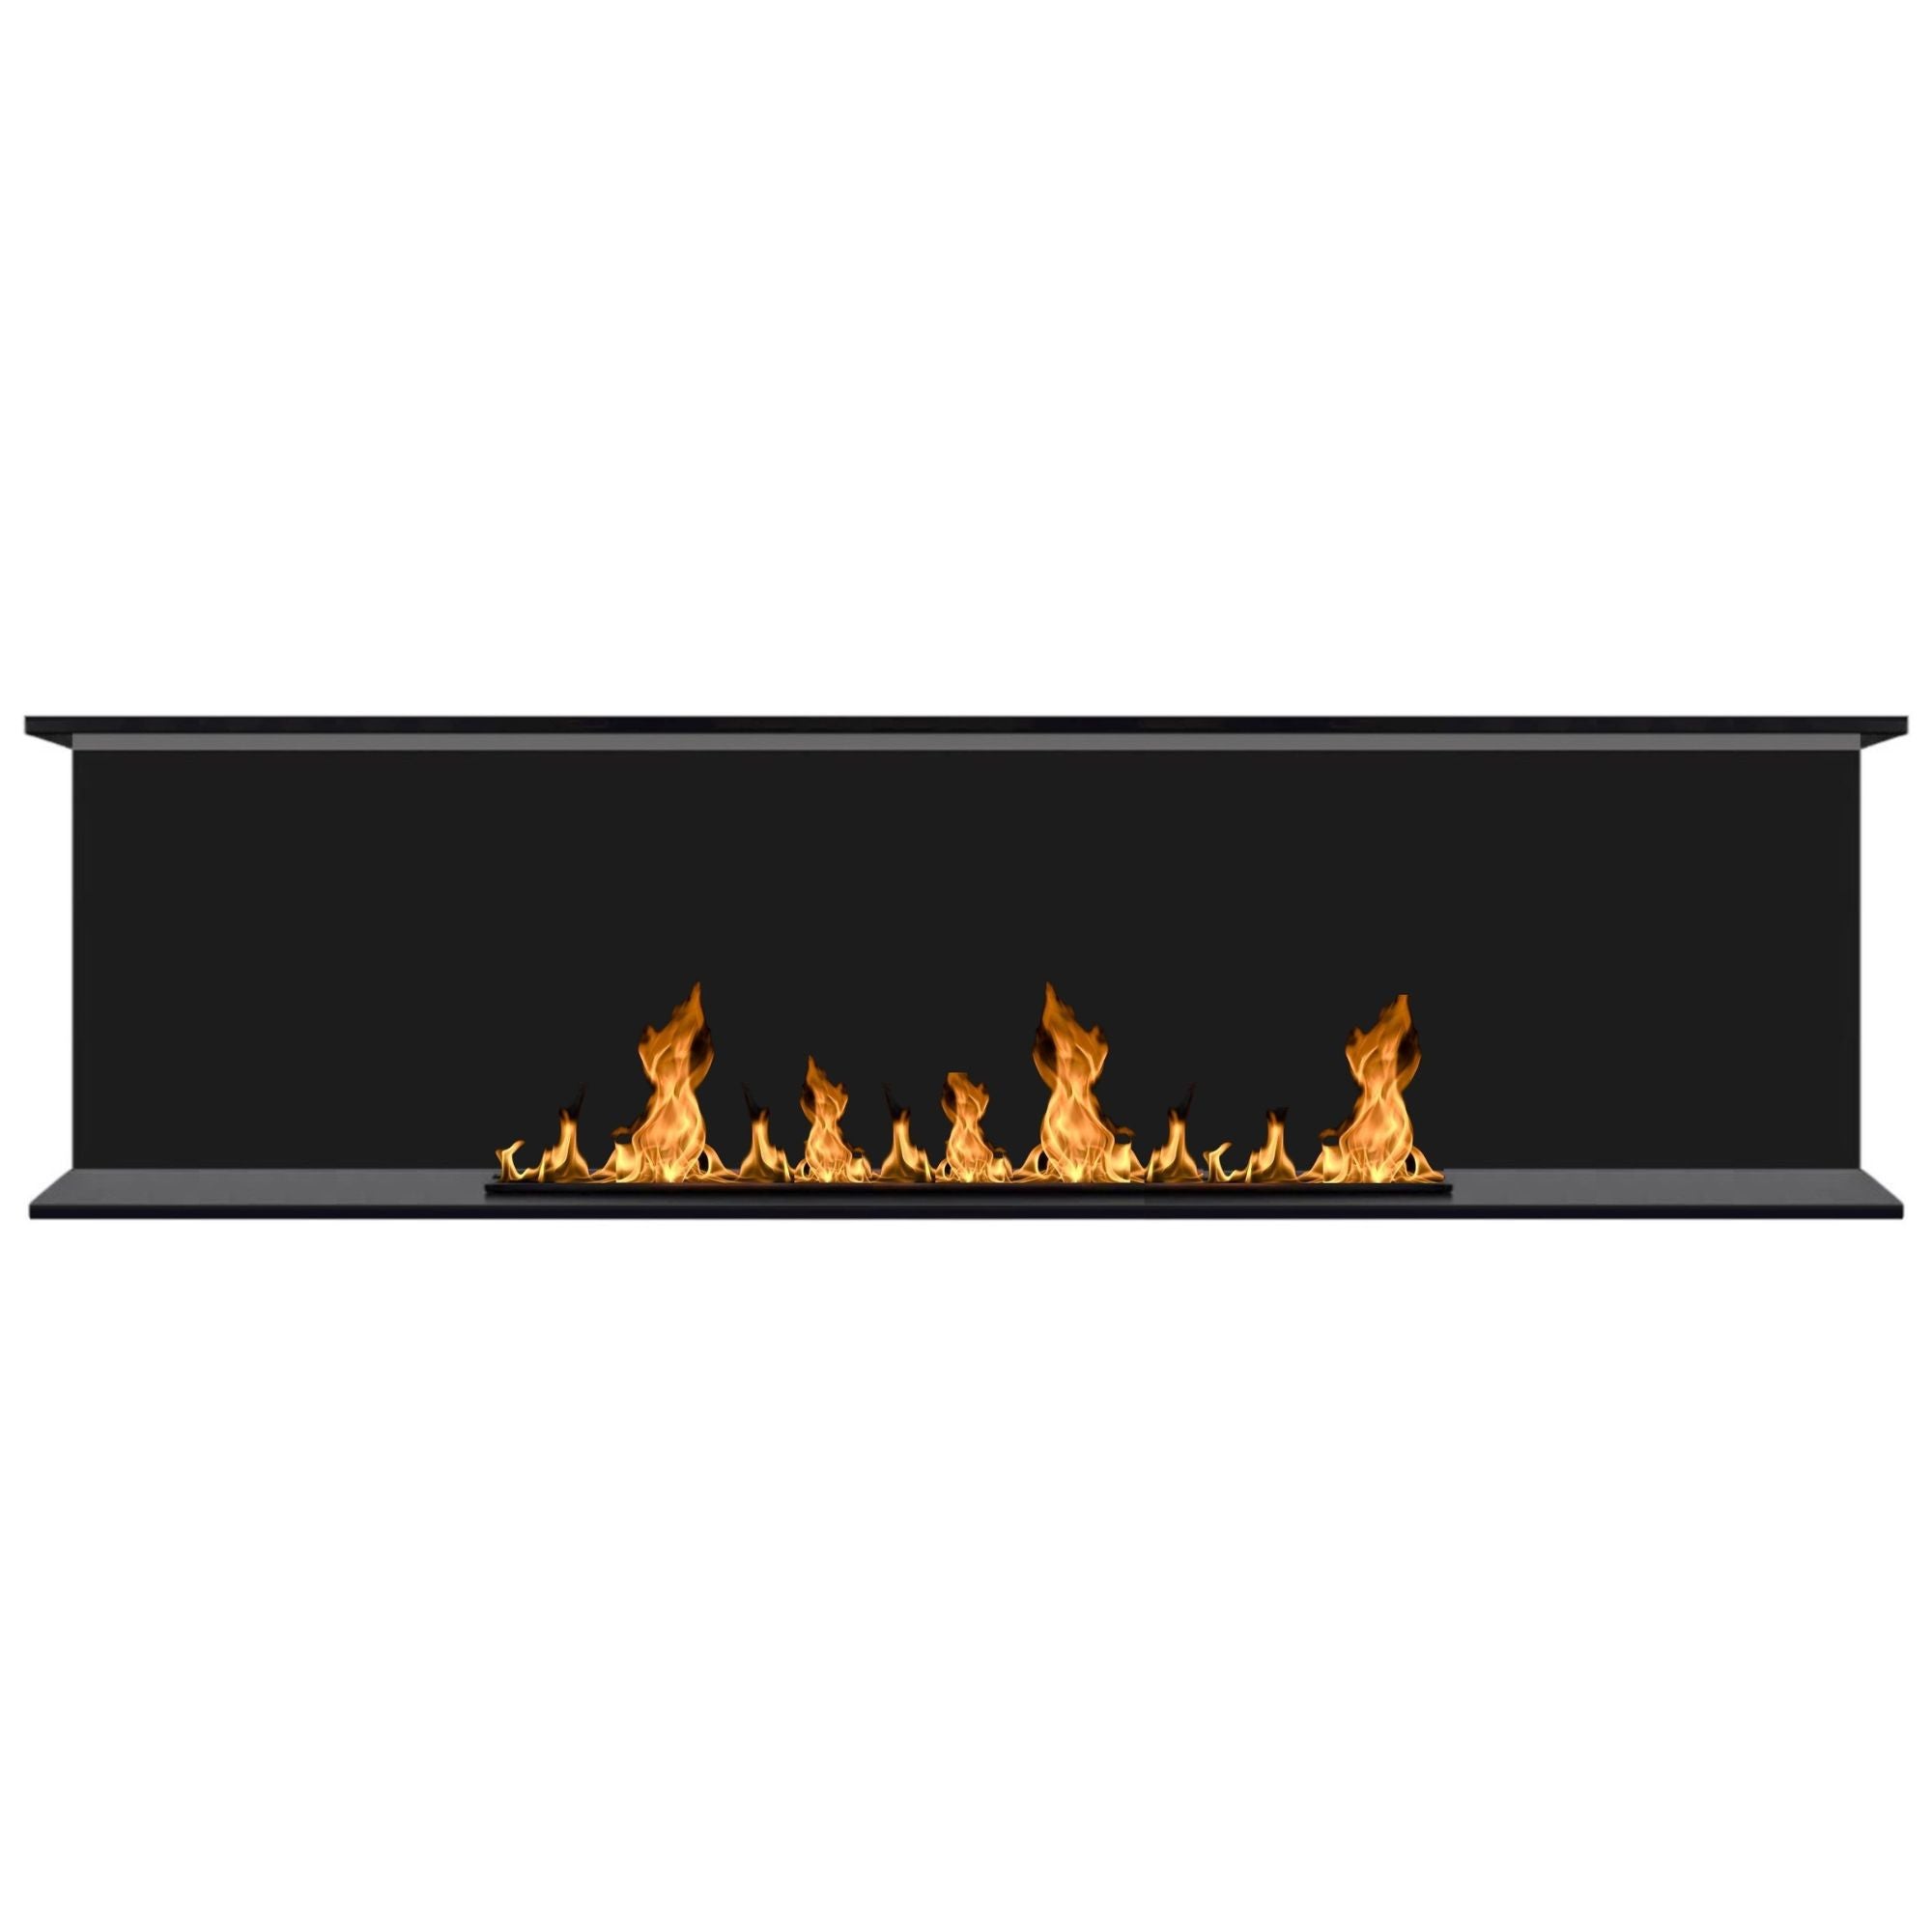 Izala Design Built-in Fireplace 178 CM